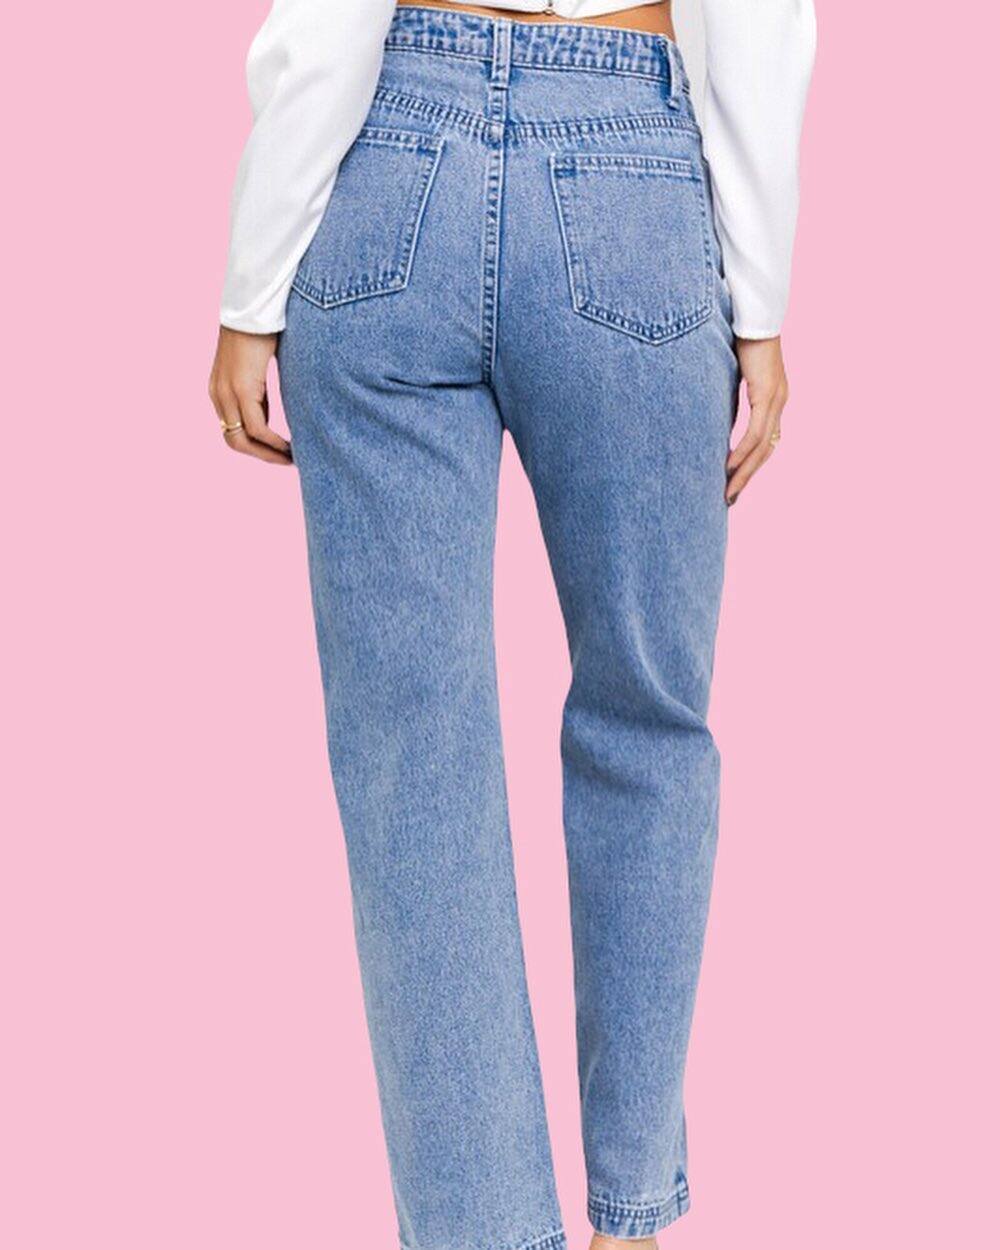 Best jeans for triangular-framed ladies